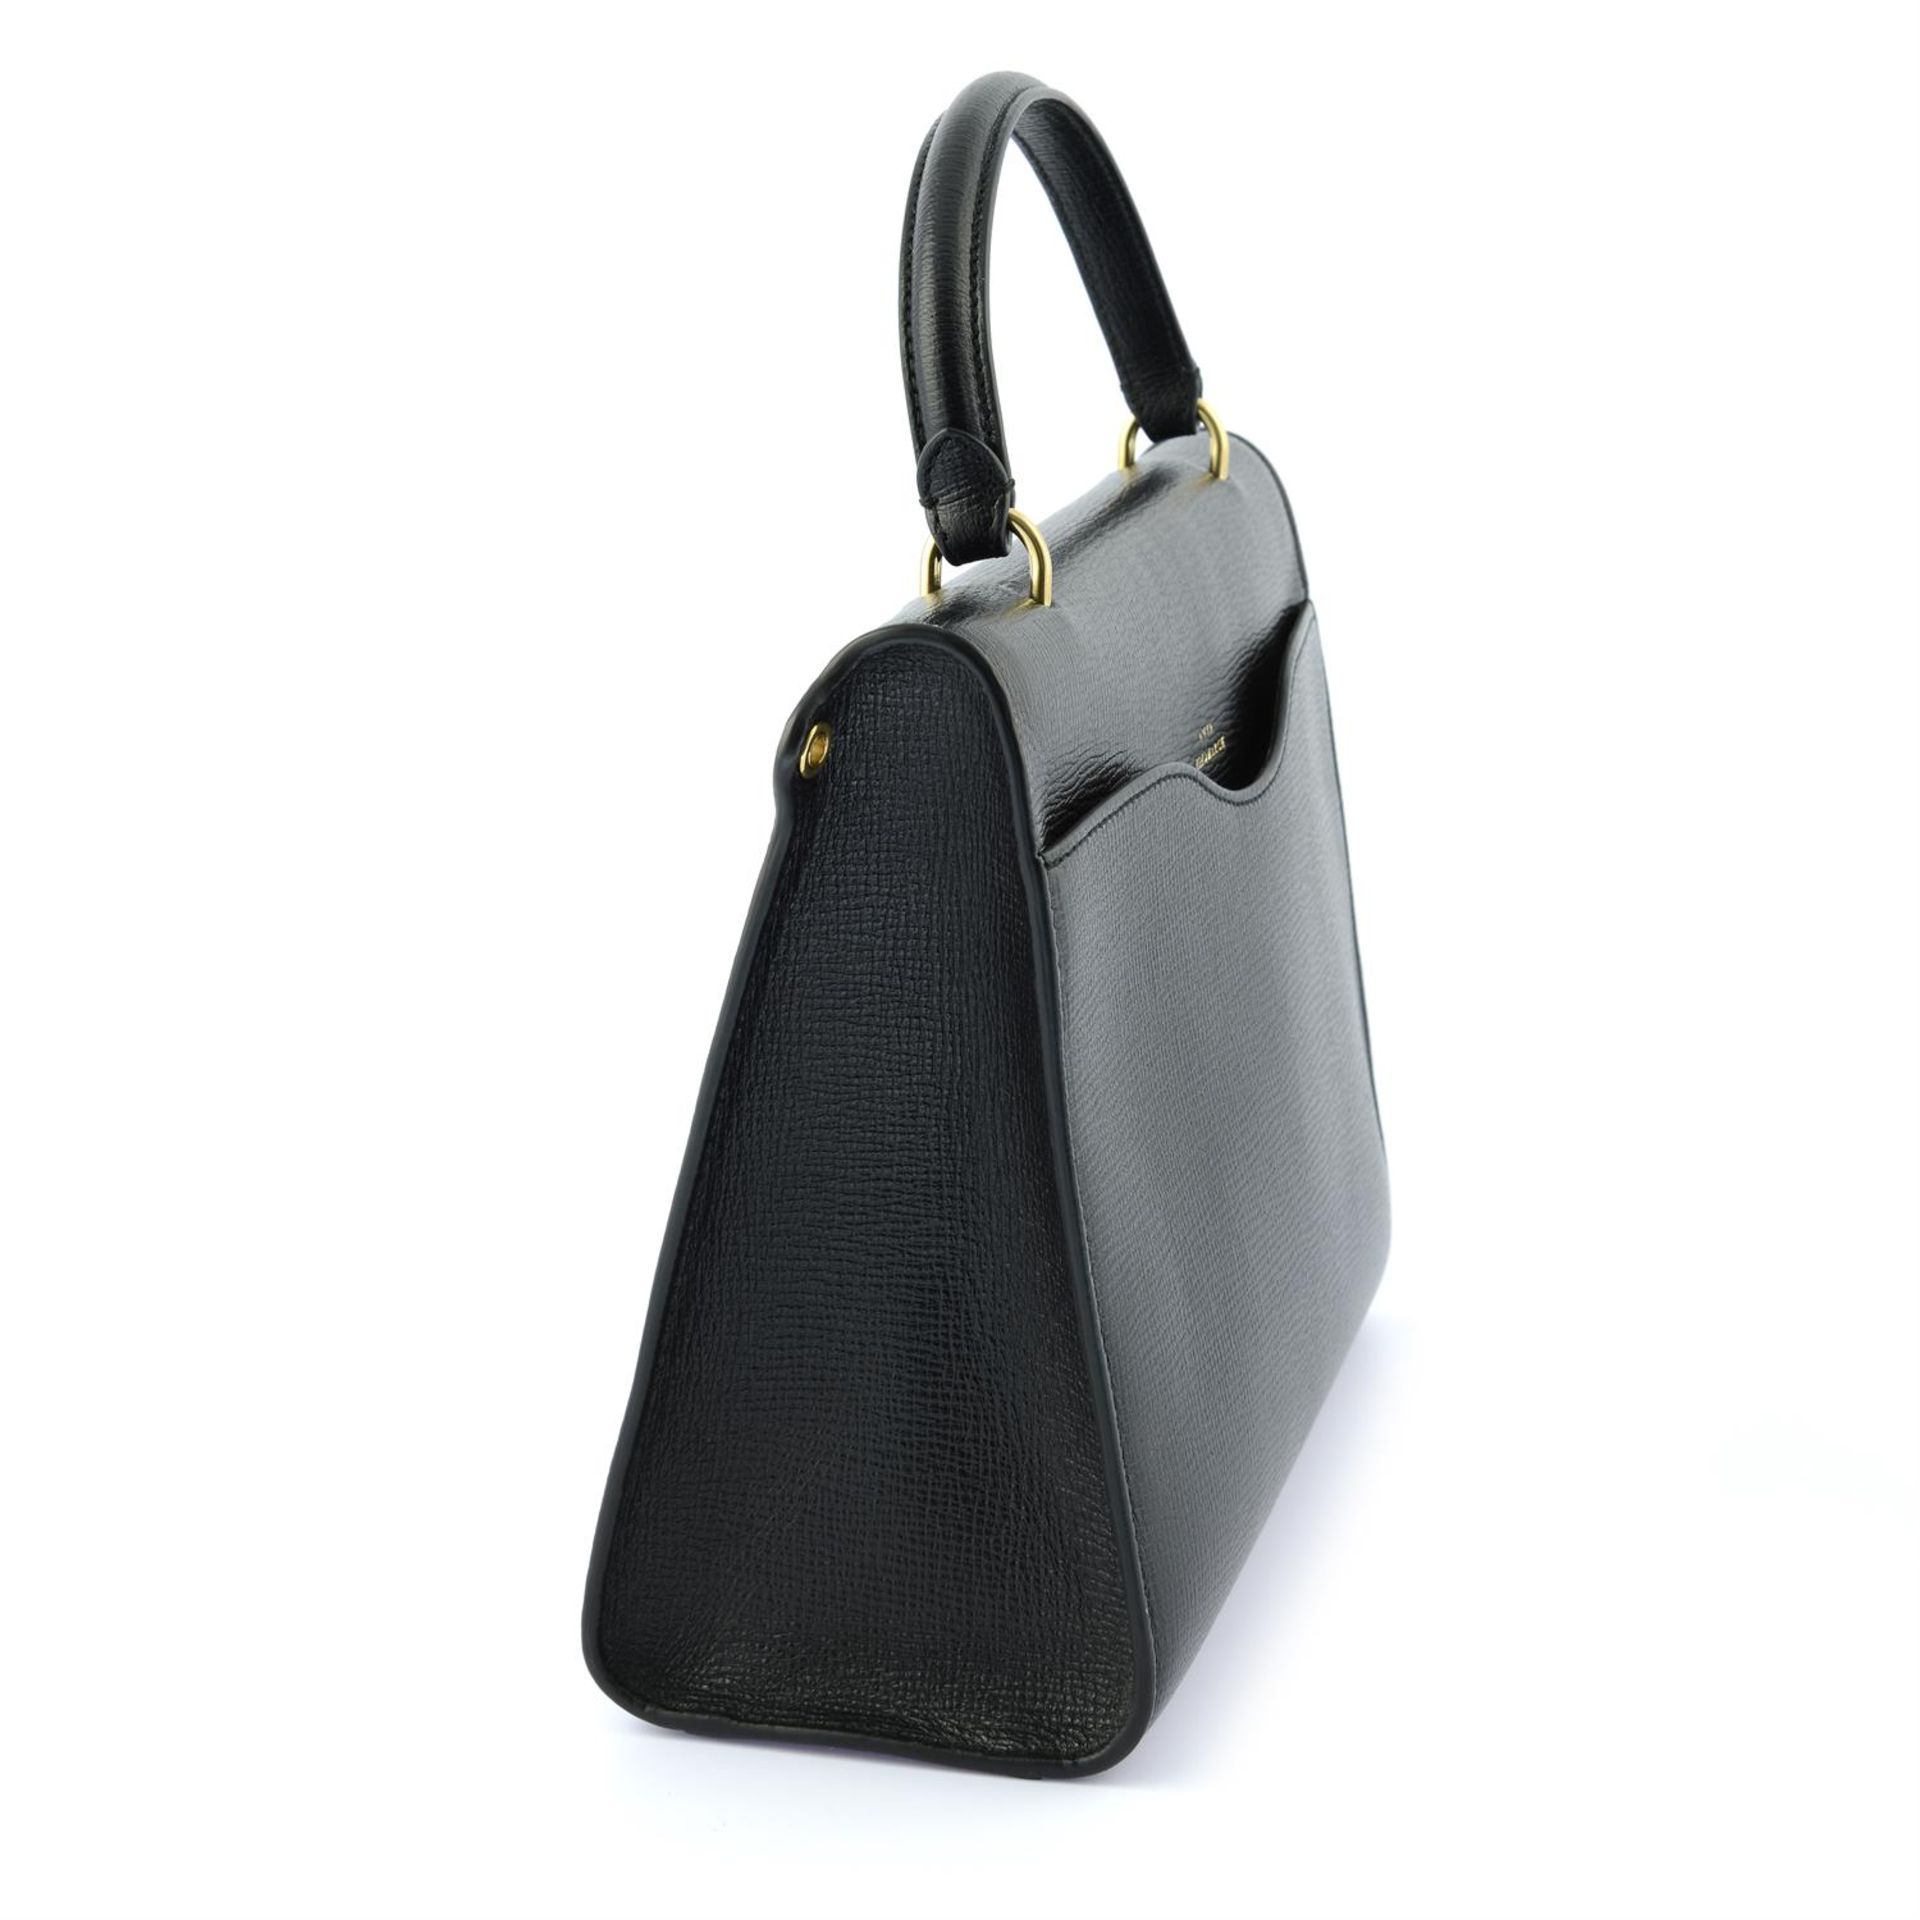 ANYA HINDMARCH - a black leather handbag. - Bild 3 aus 5